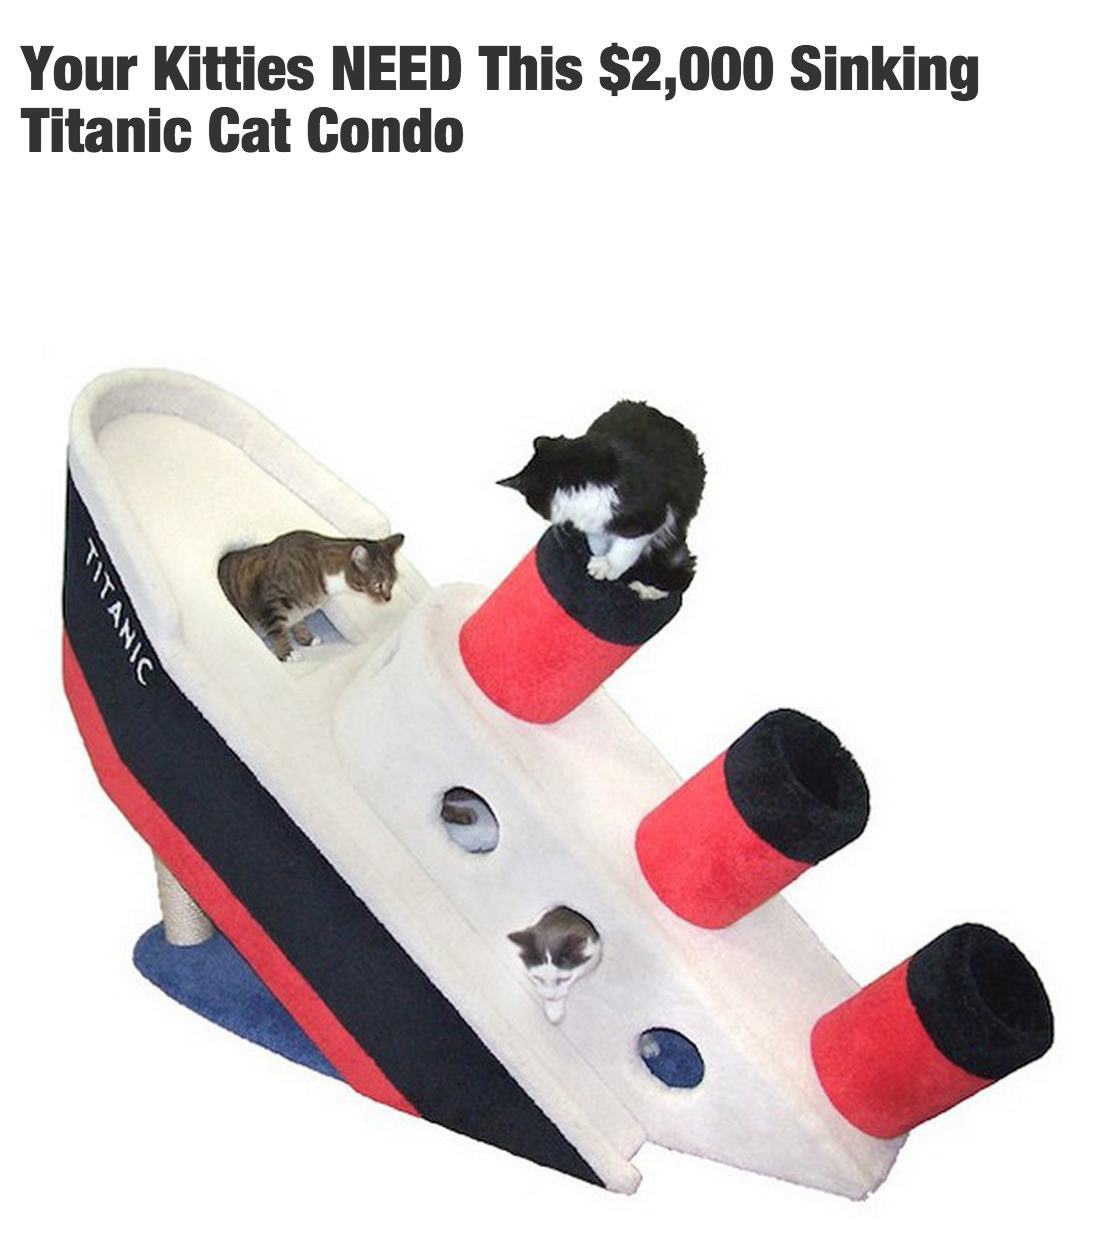 titanic cat scratch post - Your Kitties Need This $2,000 Sinking Titanic Cat Condo